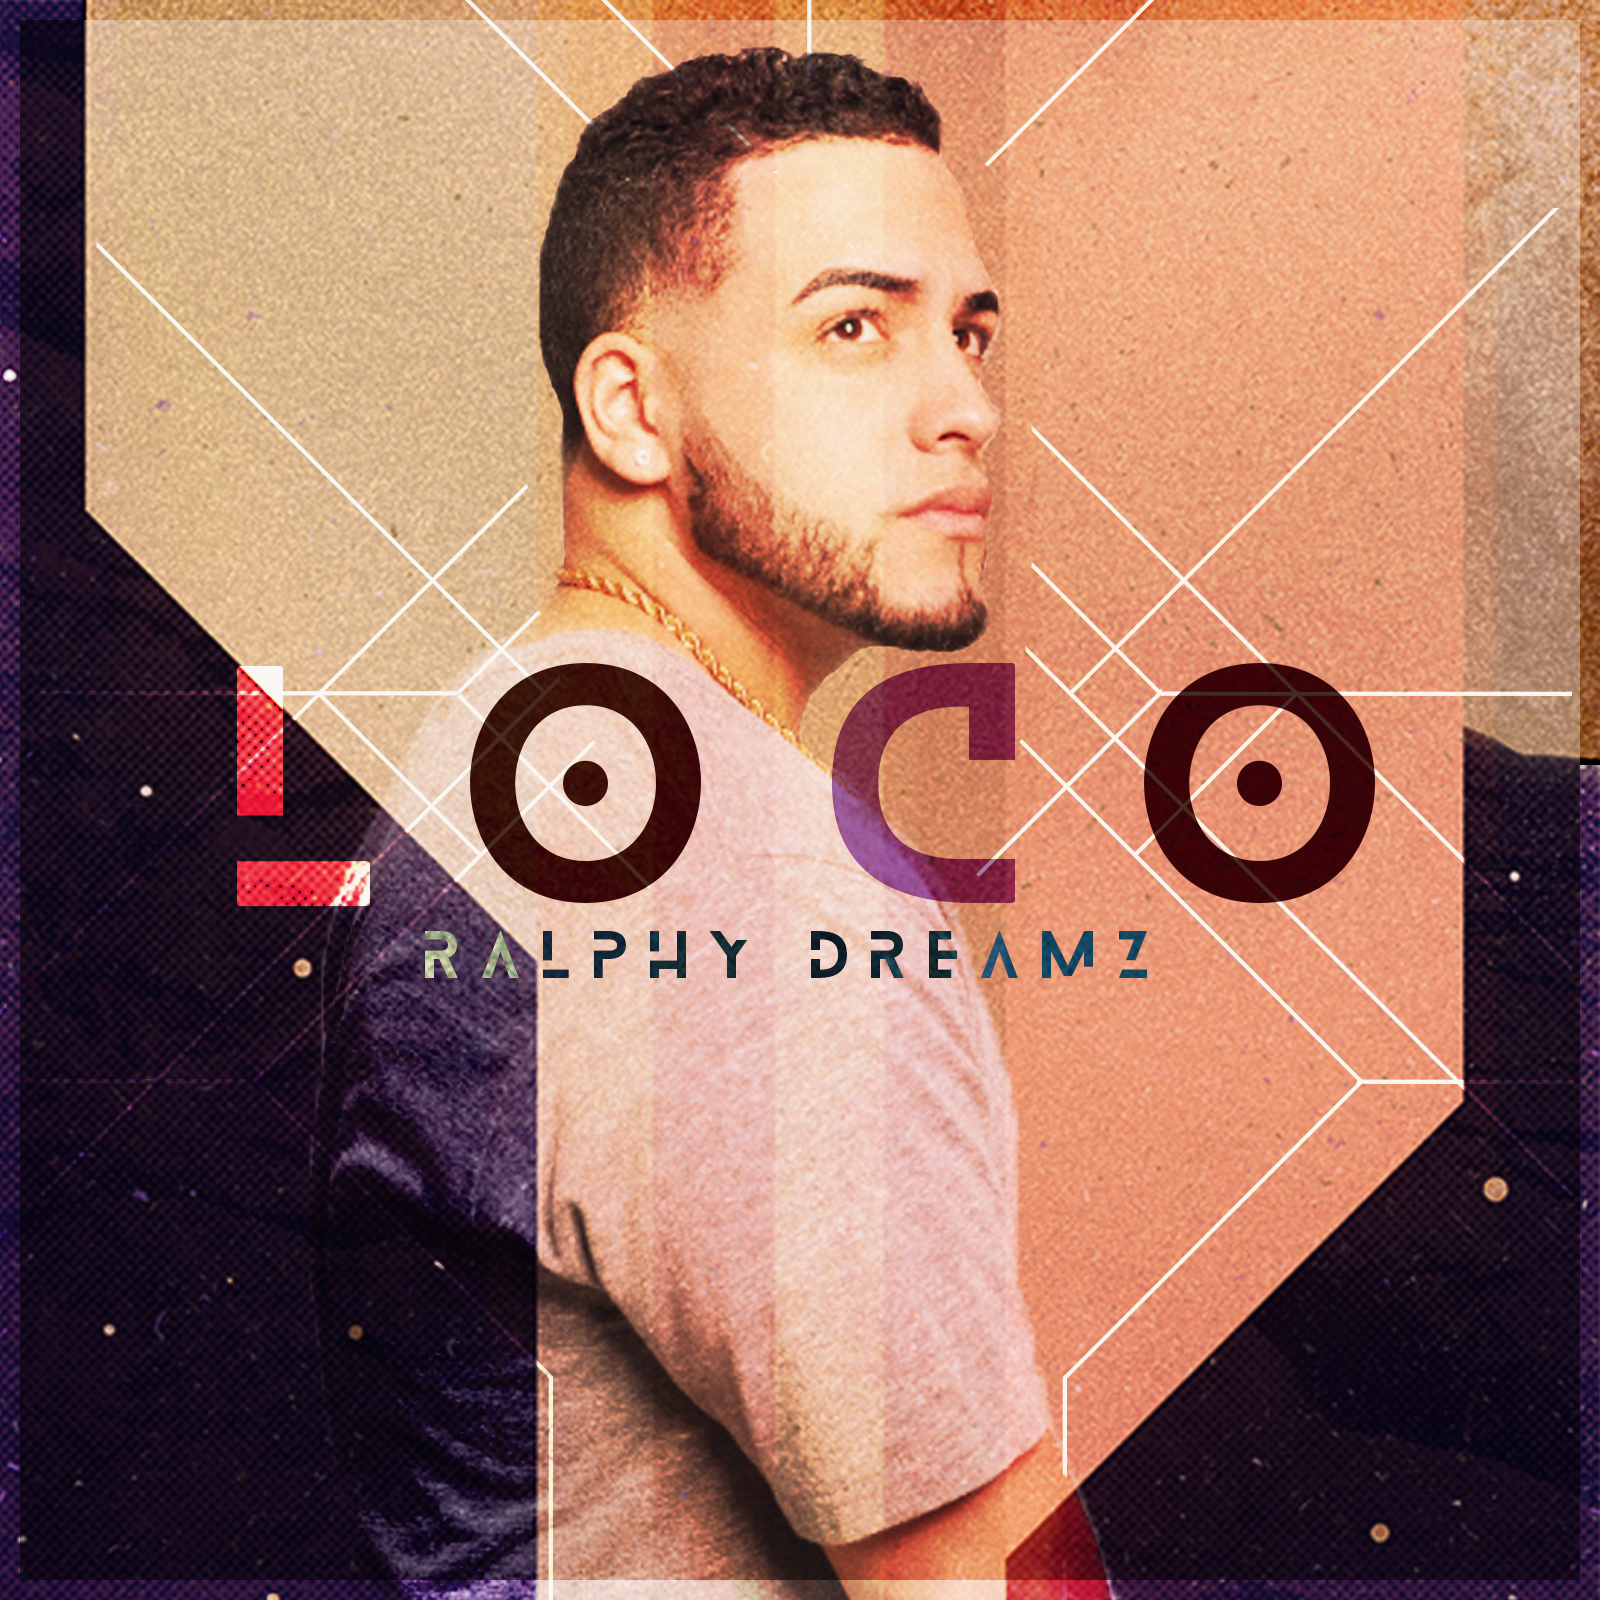 Ralphy Dreamz - LOCO ARTWORK.jpg